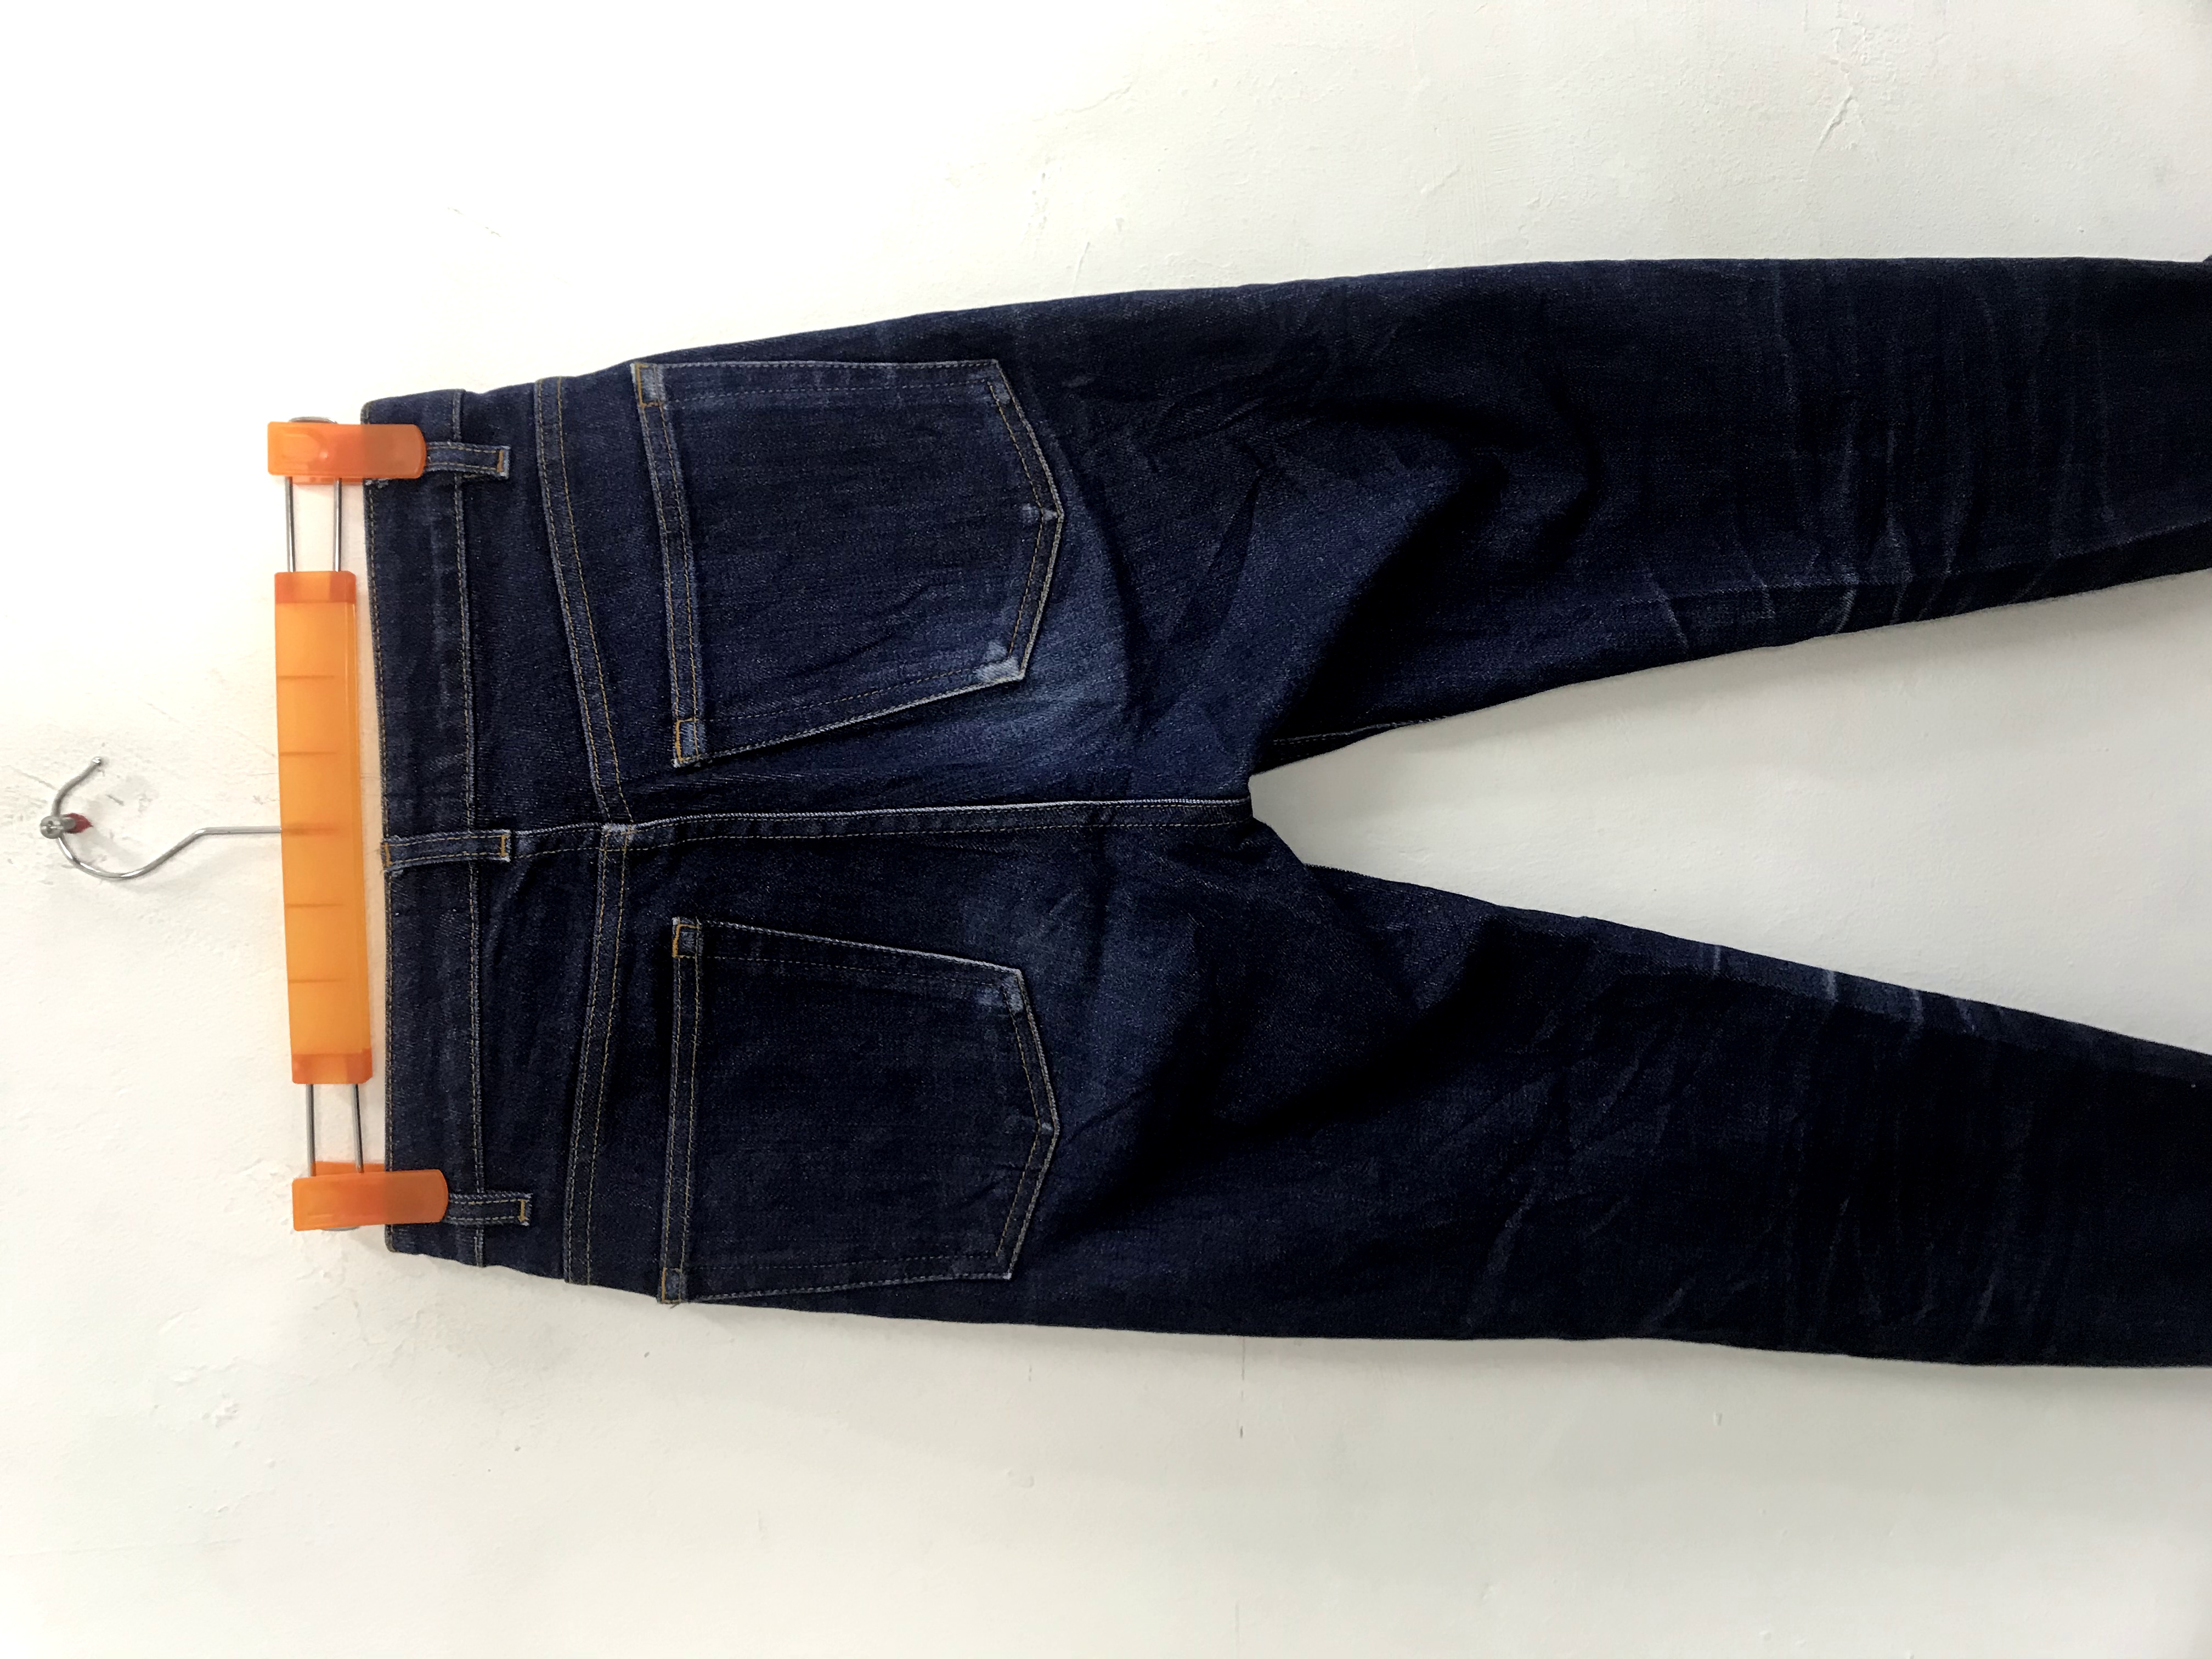 Acne Studios Italian Designer Denim Jeans Trouser Pant - 4